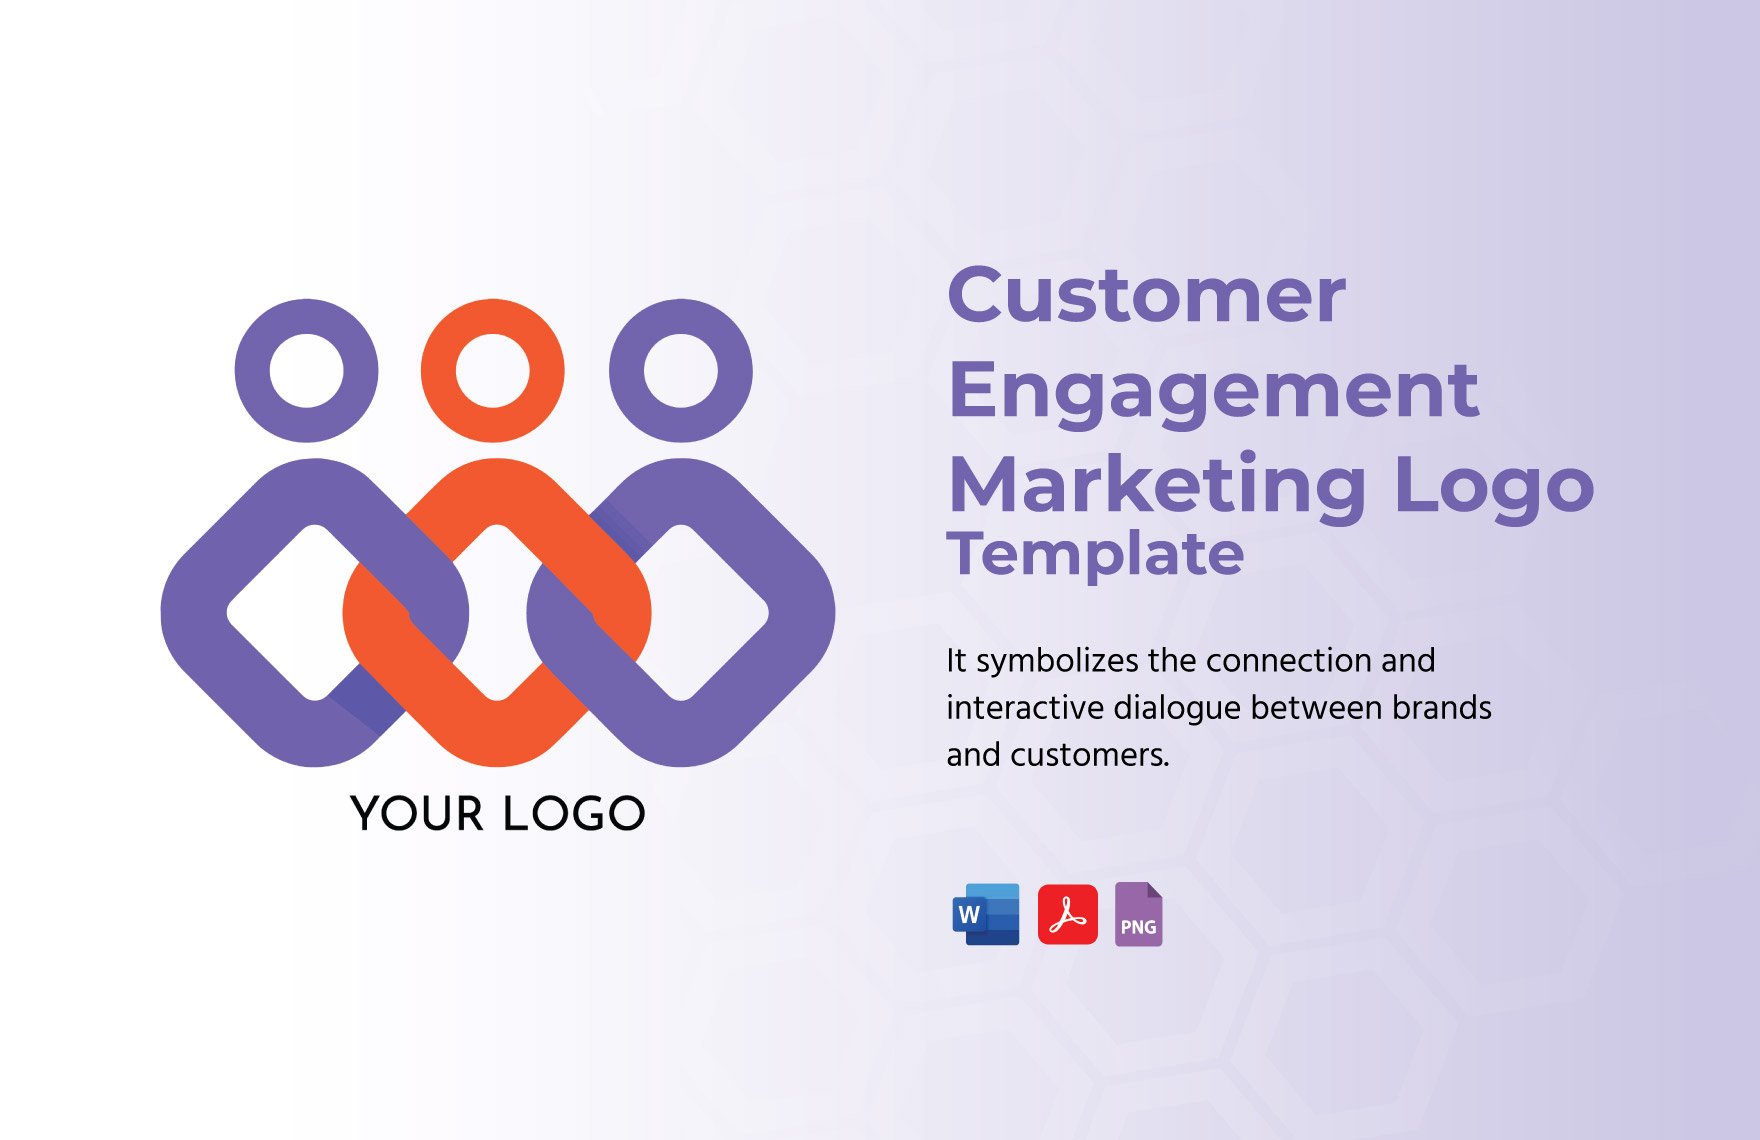 Customer Engagement Marketing Logo Template